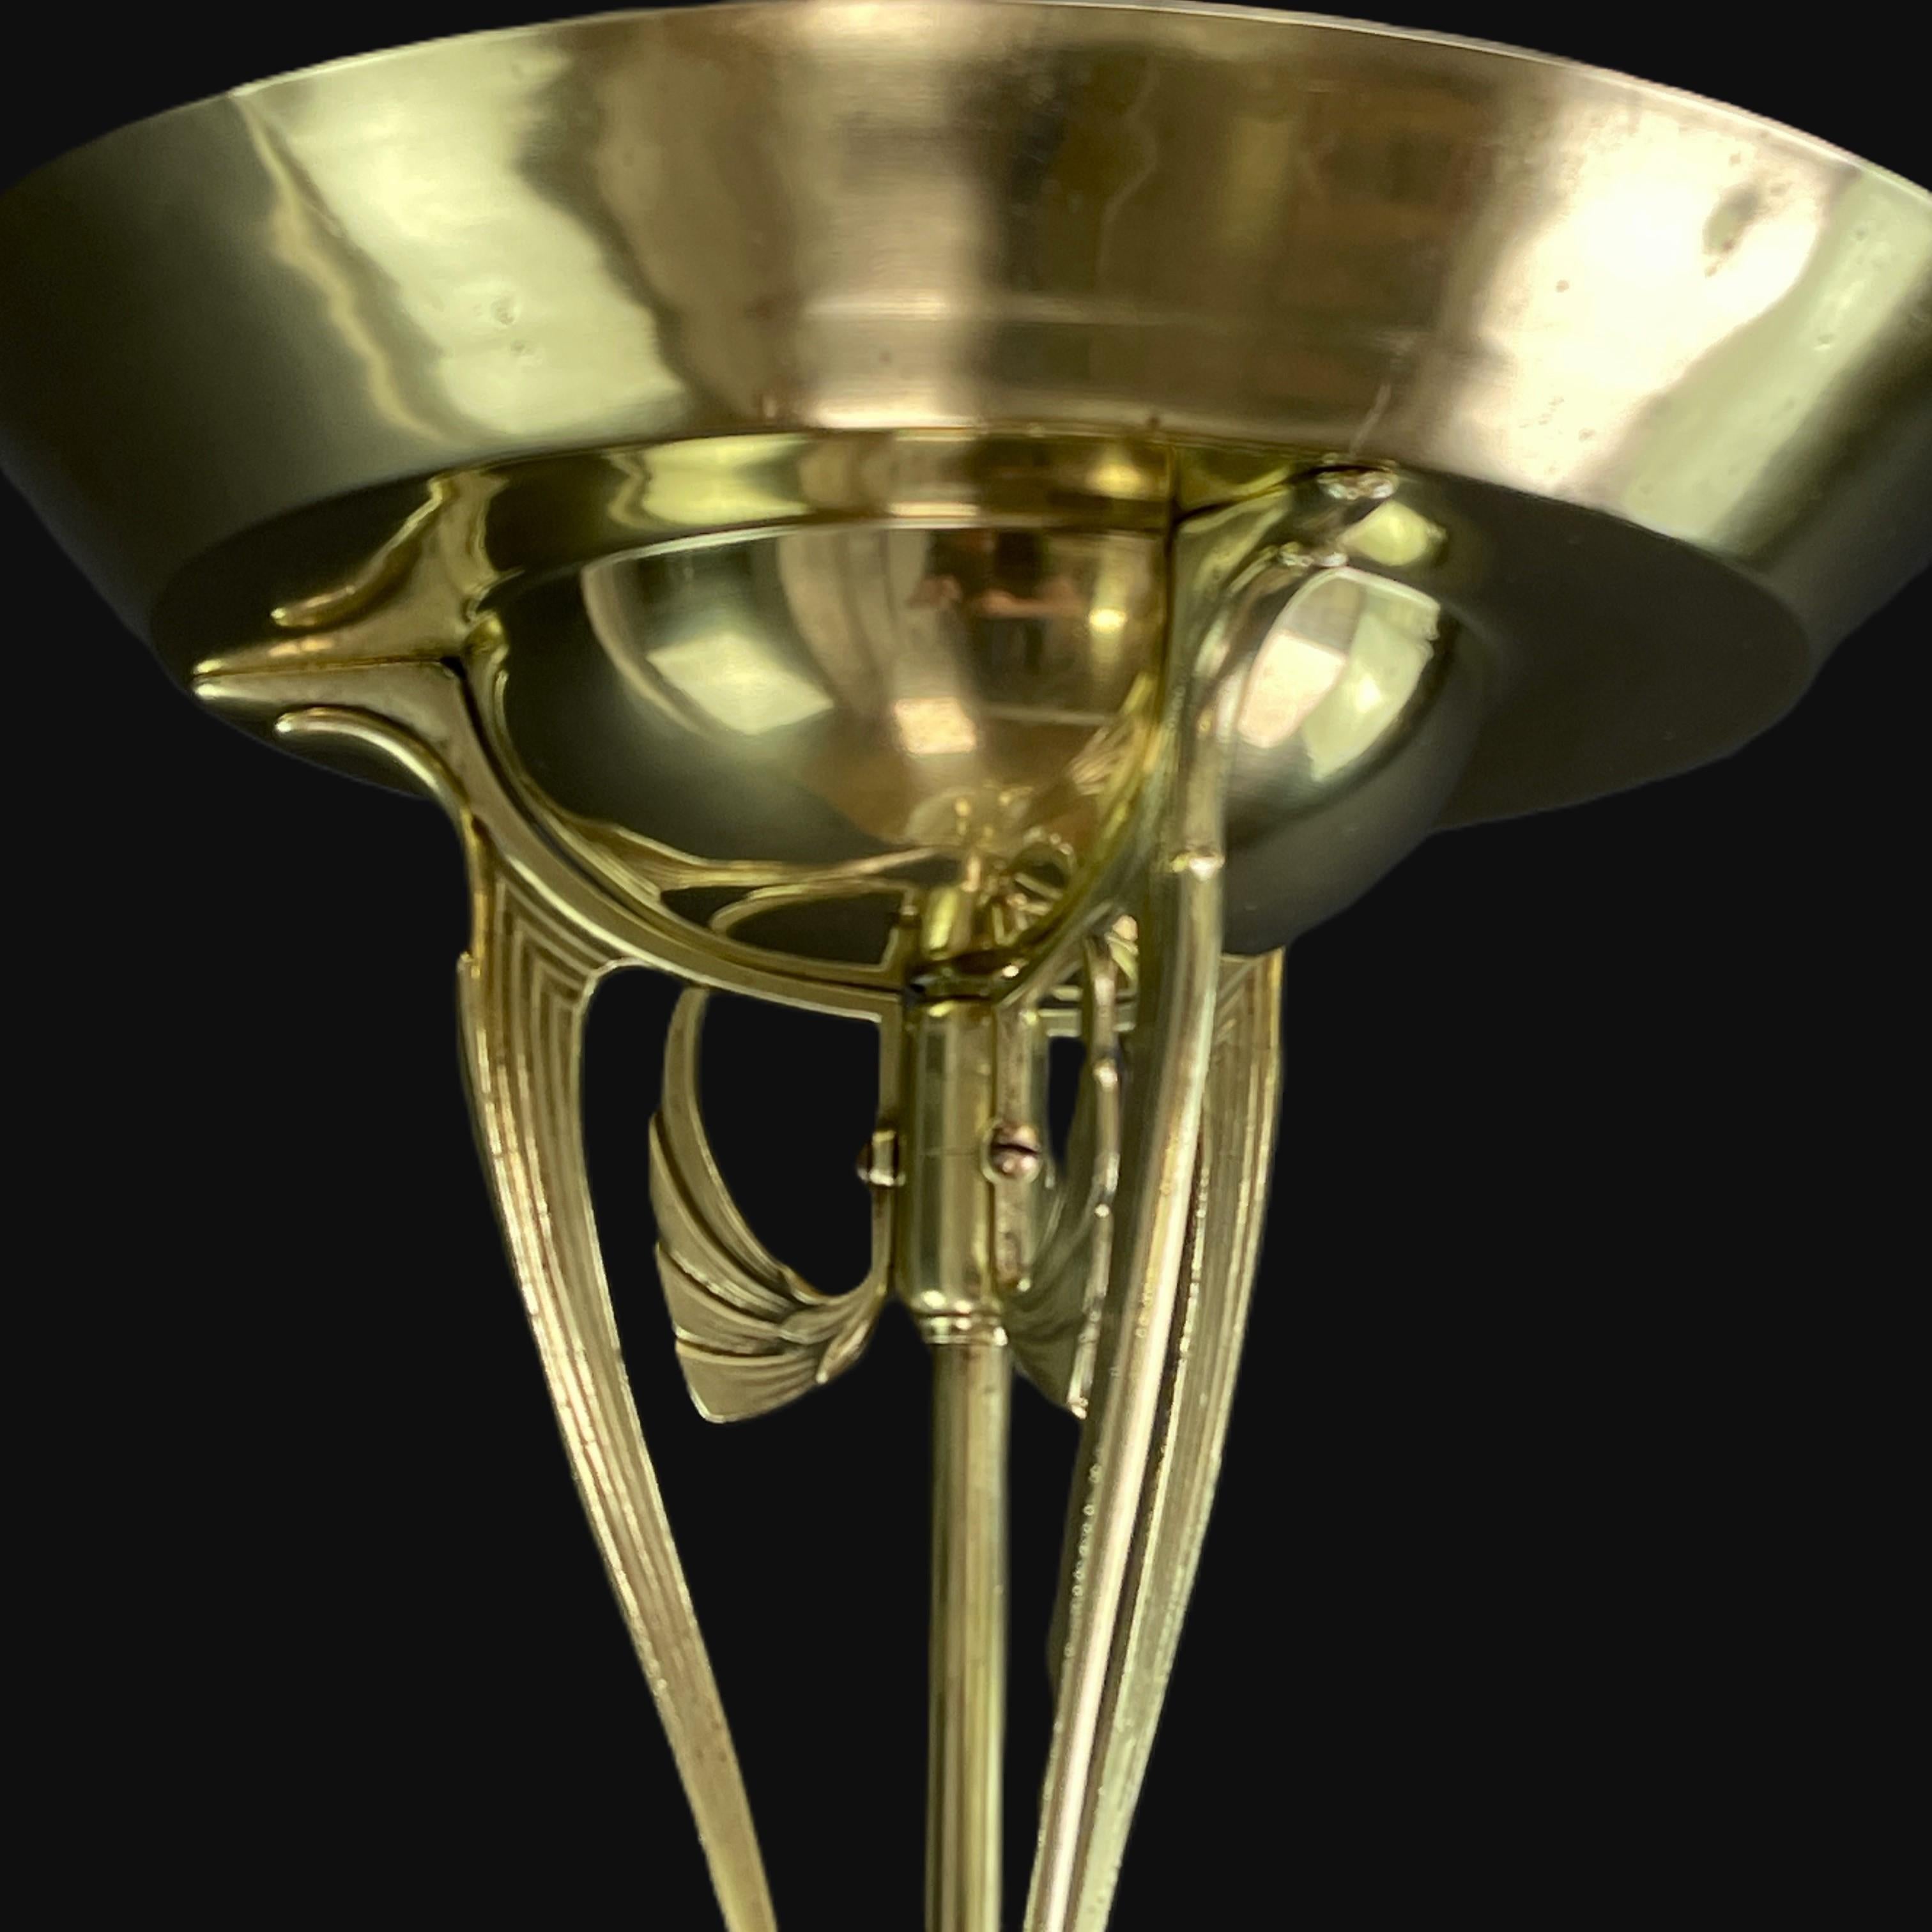 Jugendstil-Deckenlampe Bronze, 1900er Jahre (20. Jahrhundert)